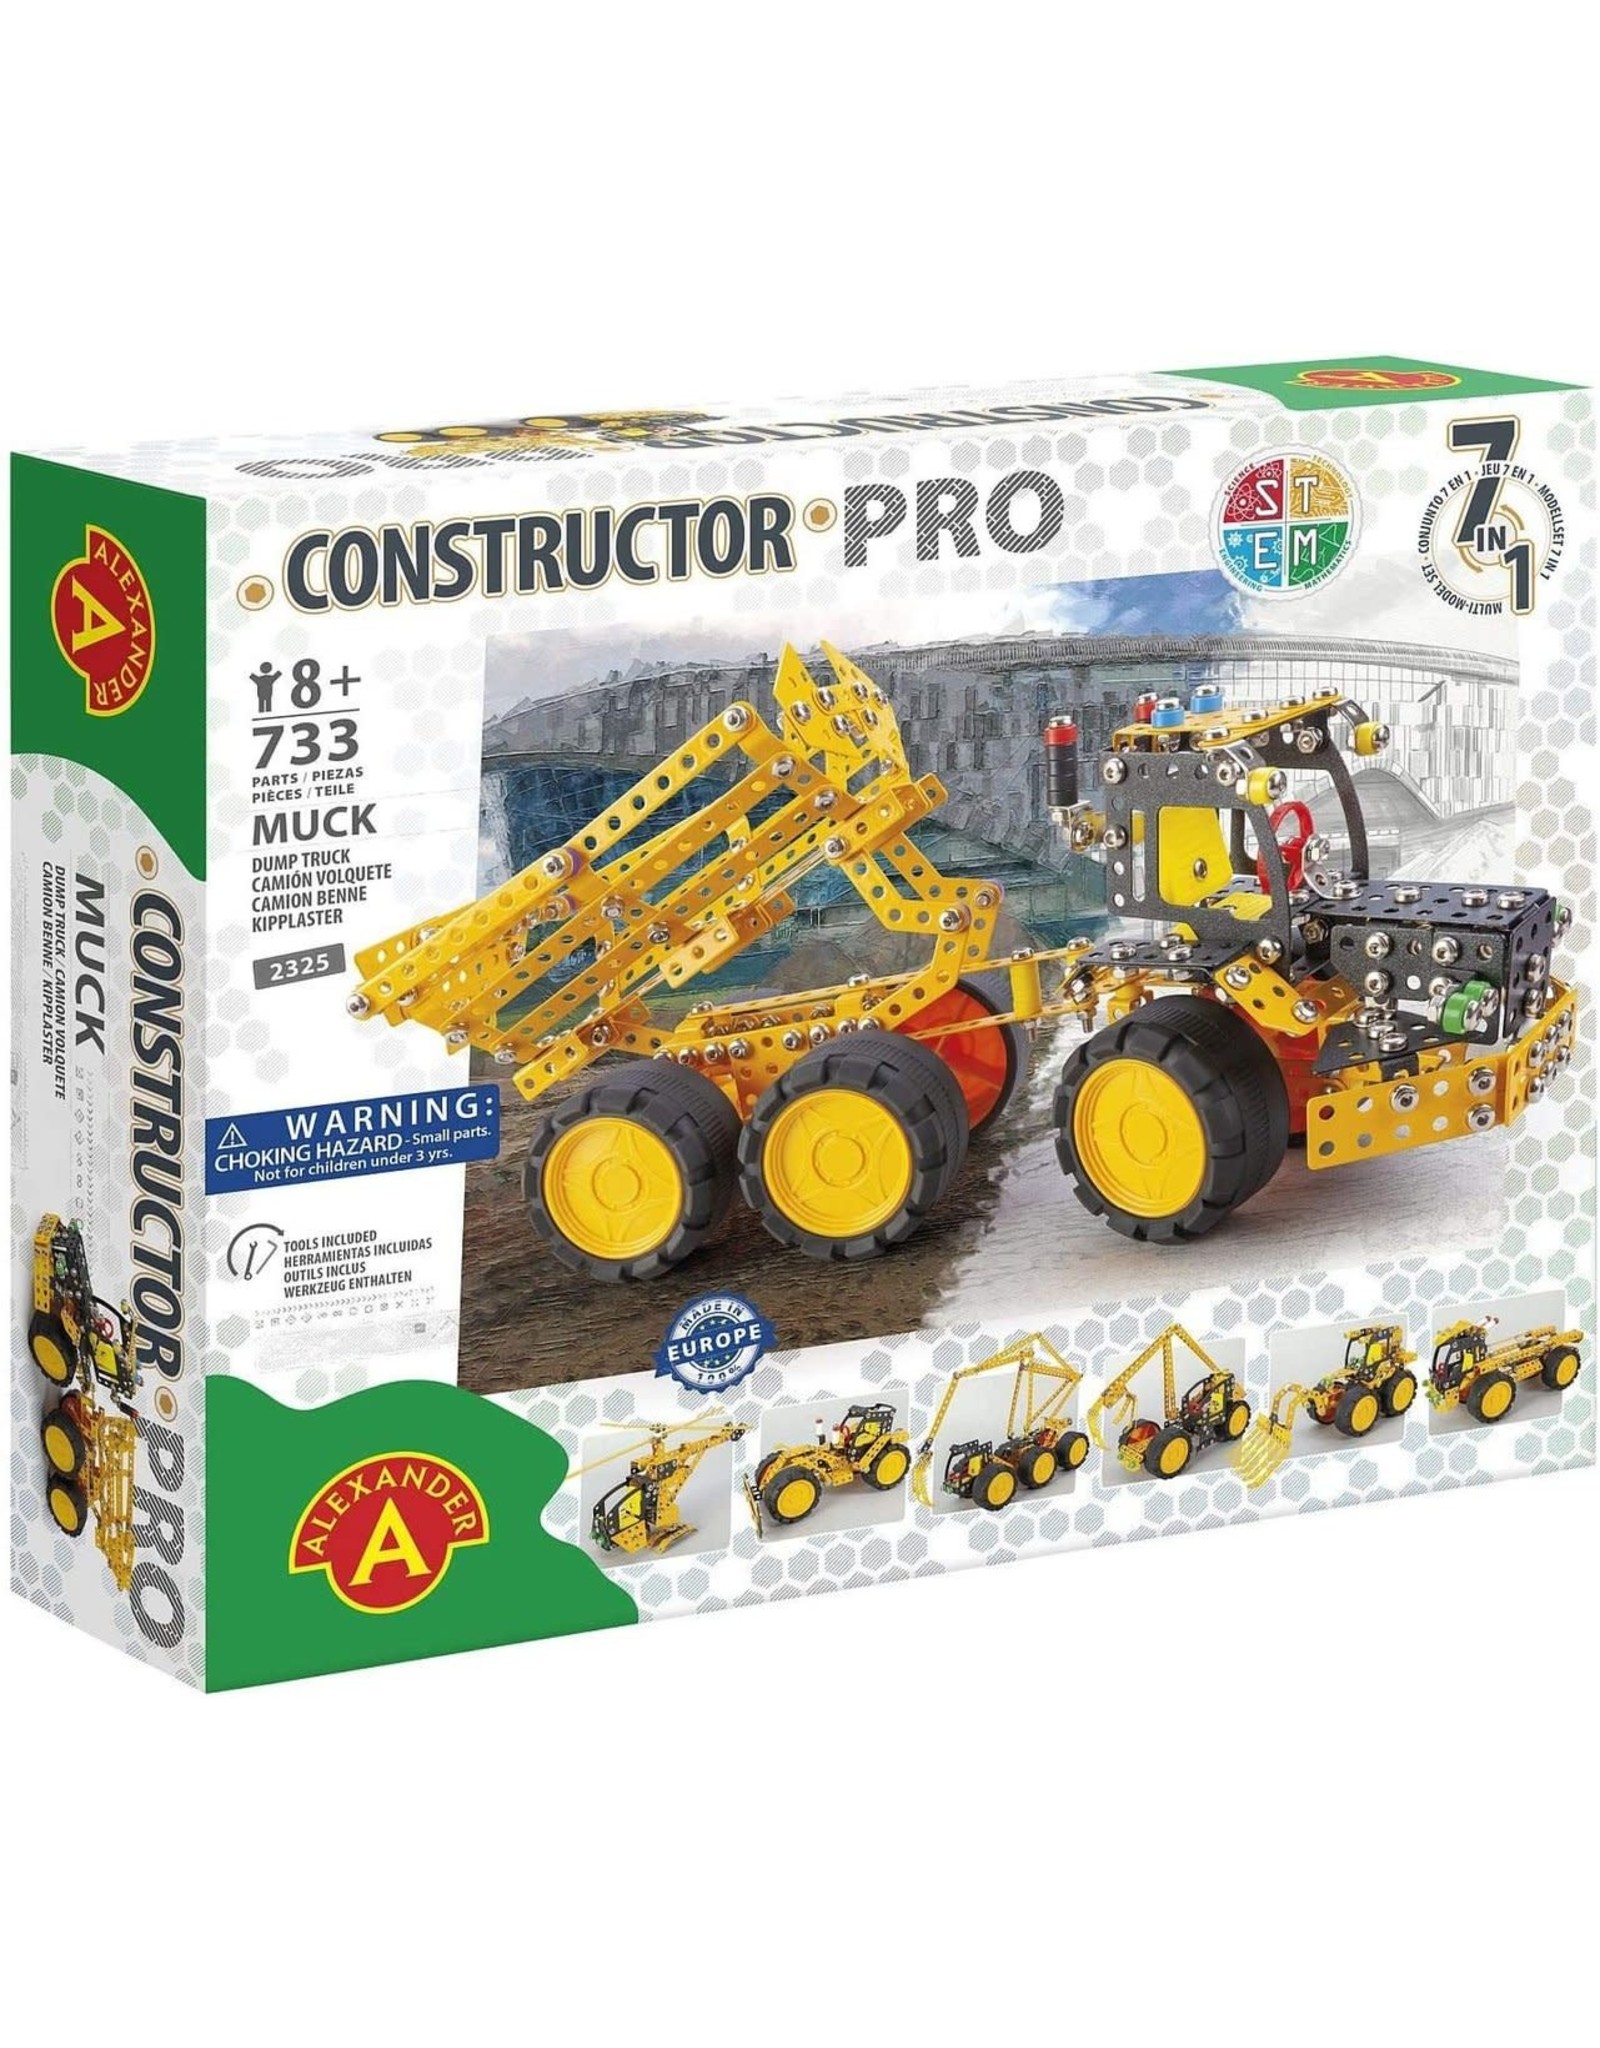 Constructor Pro “Dump Truck”